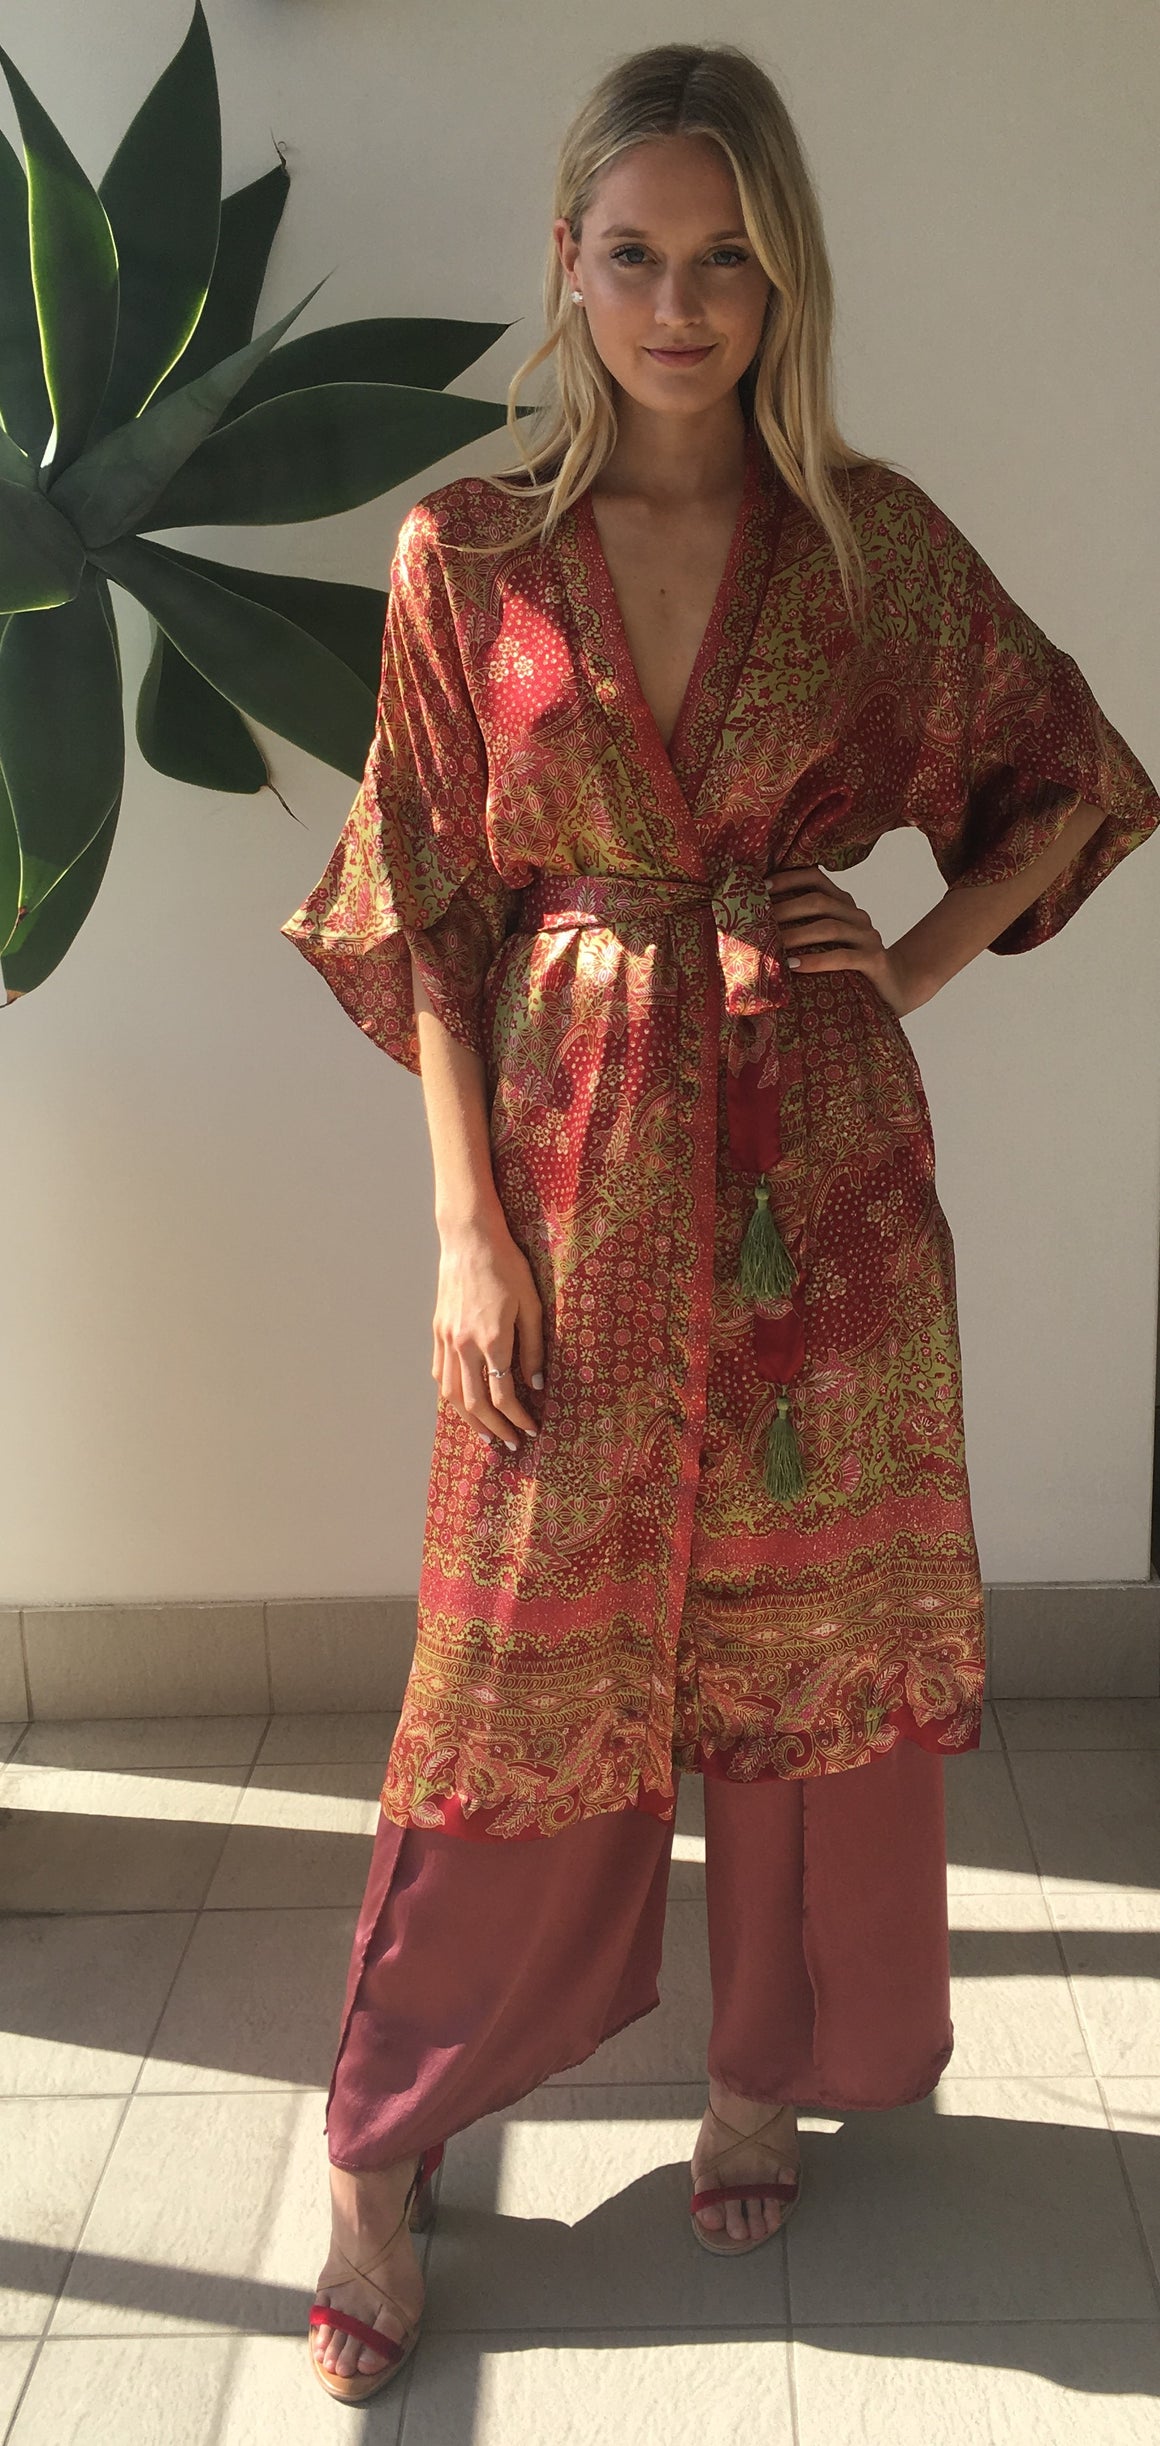 et cetera WOMAN Just Lounging Around kimono style jacket in damask hand-batik silk